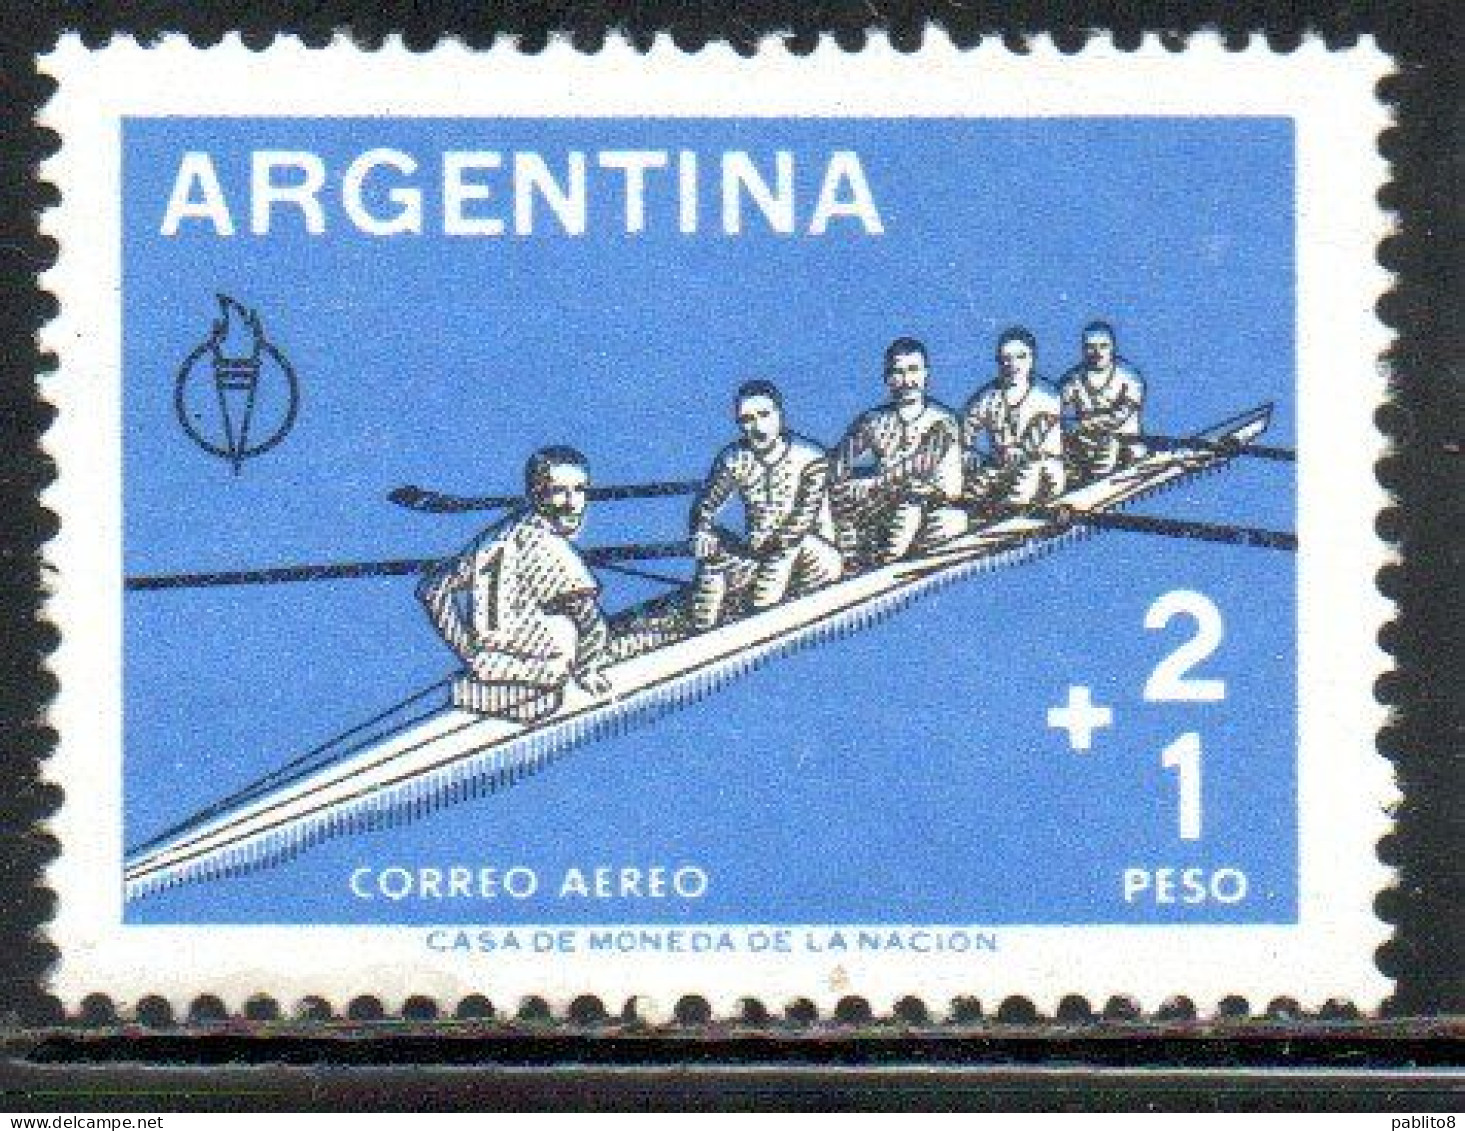 ARGENTINA 1959 AIR POST MAIL AIRMAIL CORREO AEREO ATHLETICS ROWING 2p + 1p MNH - Aéreo